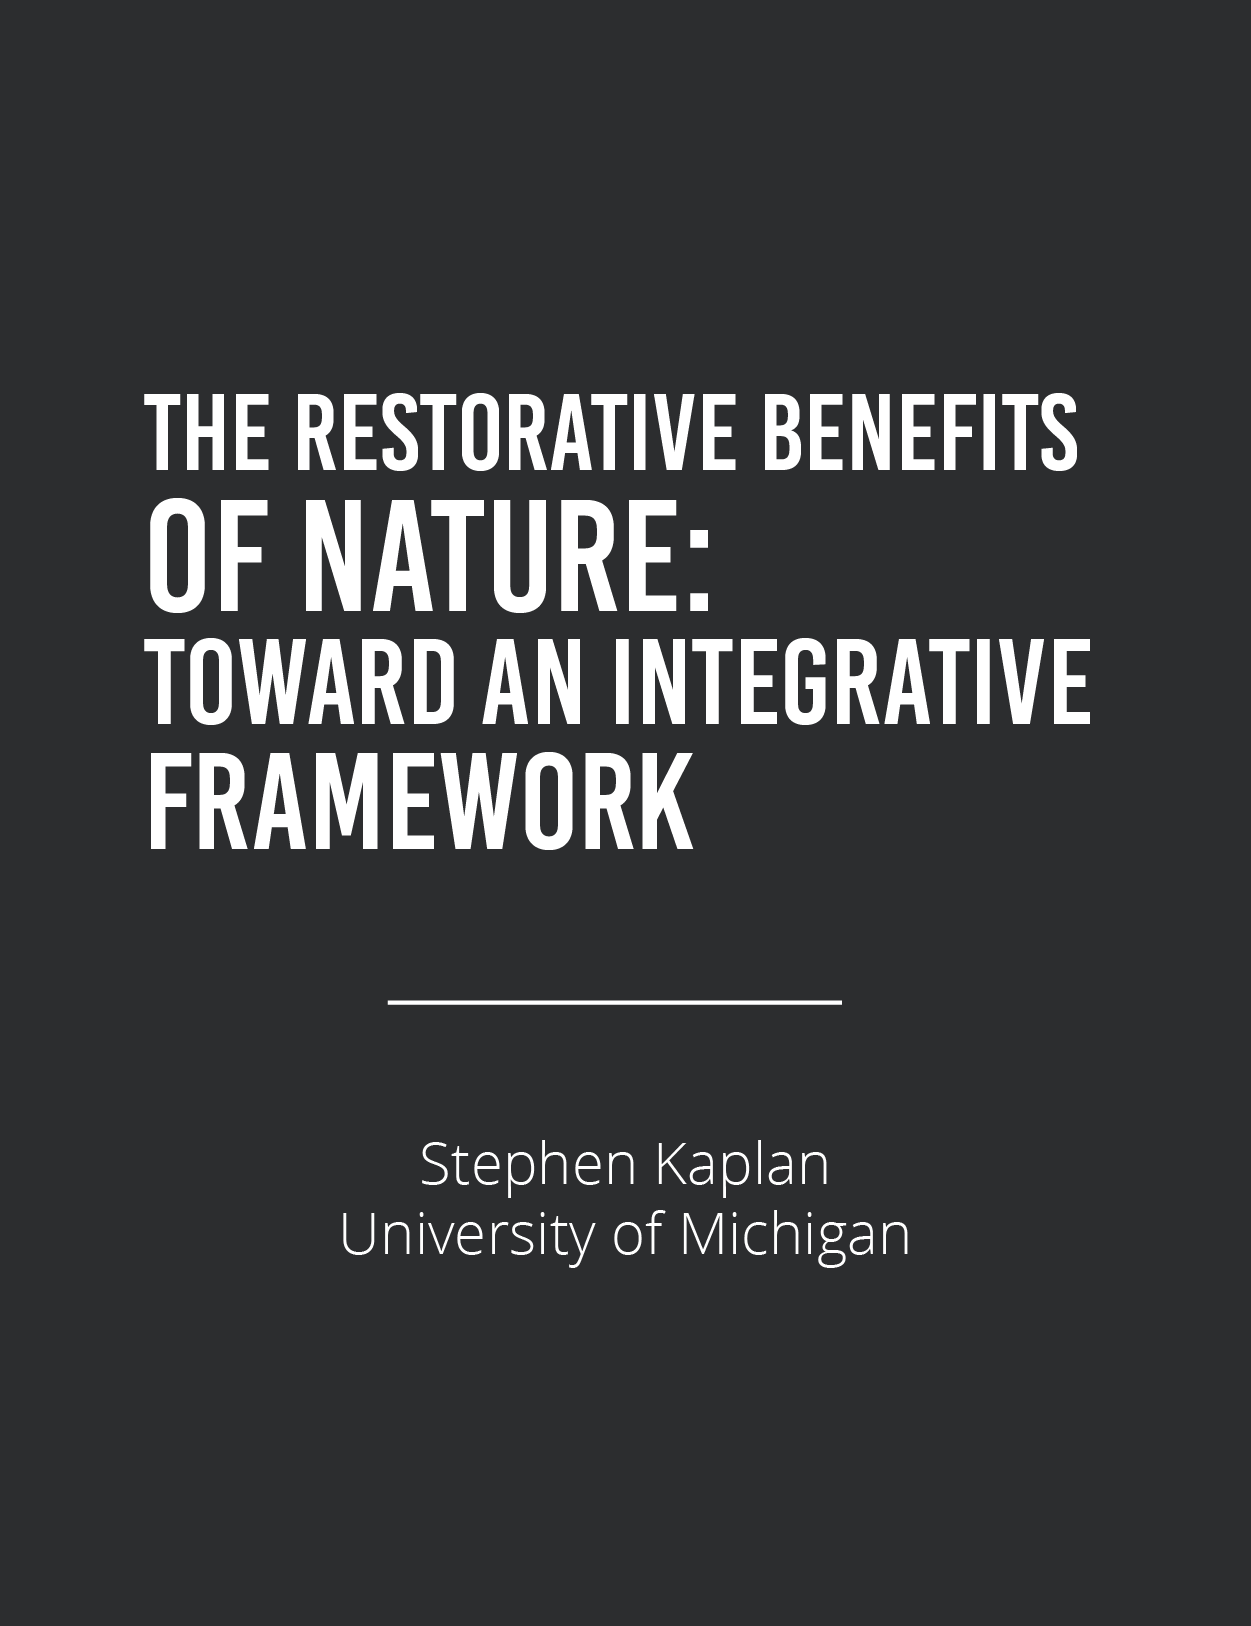 The Restorative Benefits of NatureFeatured Image